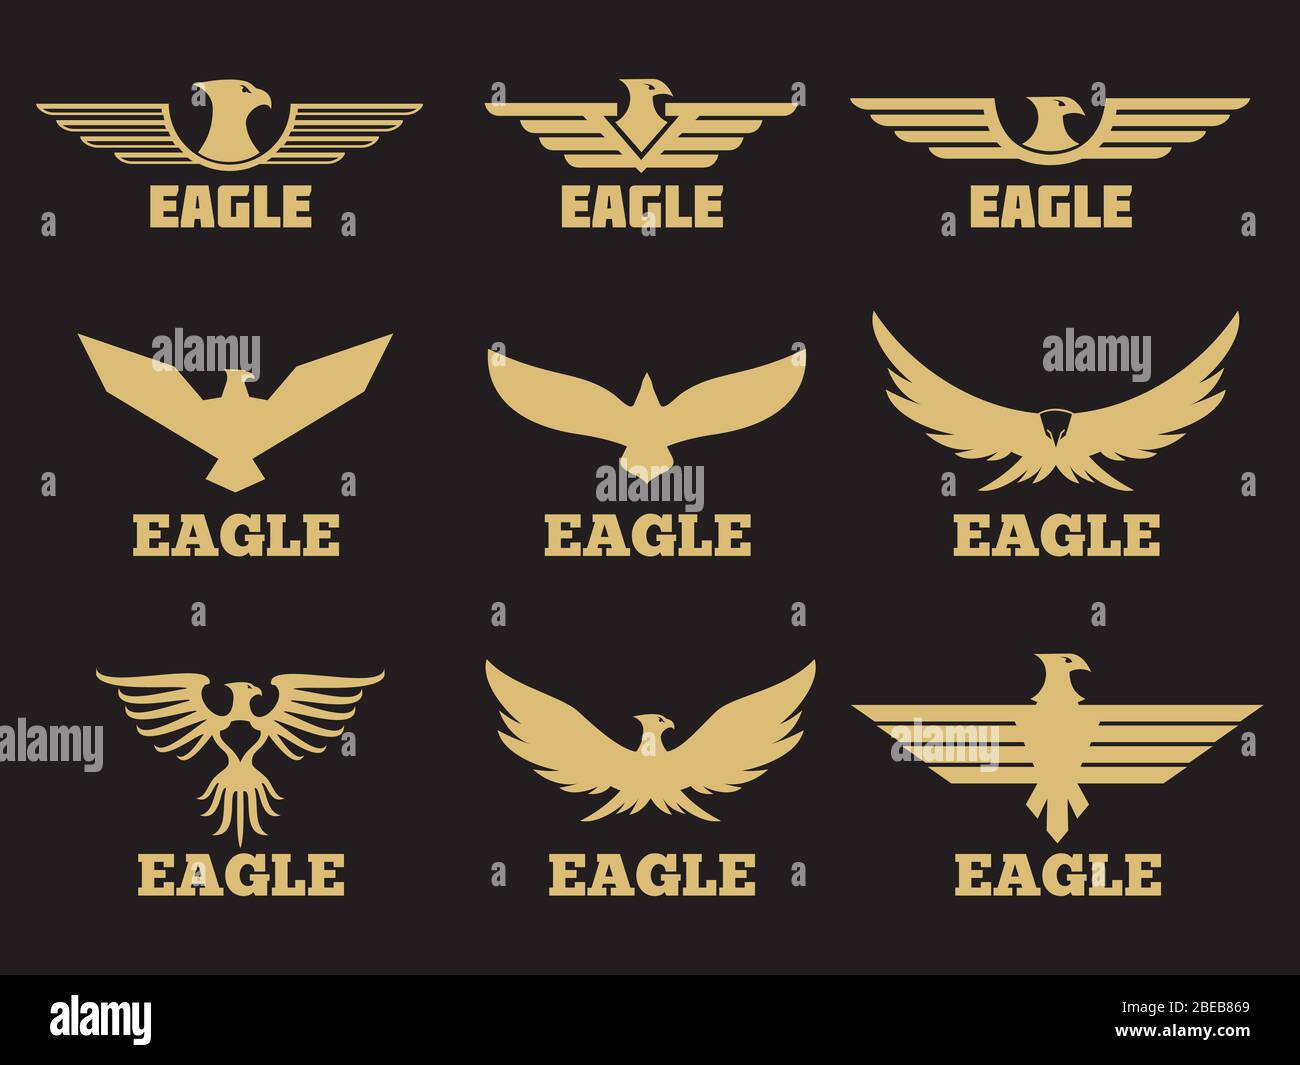 Eagle emblem logo hi-res stock photography and images - Alamy